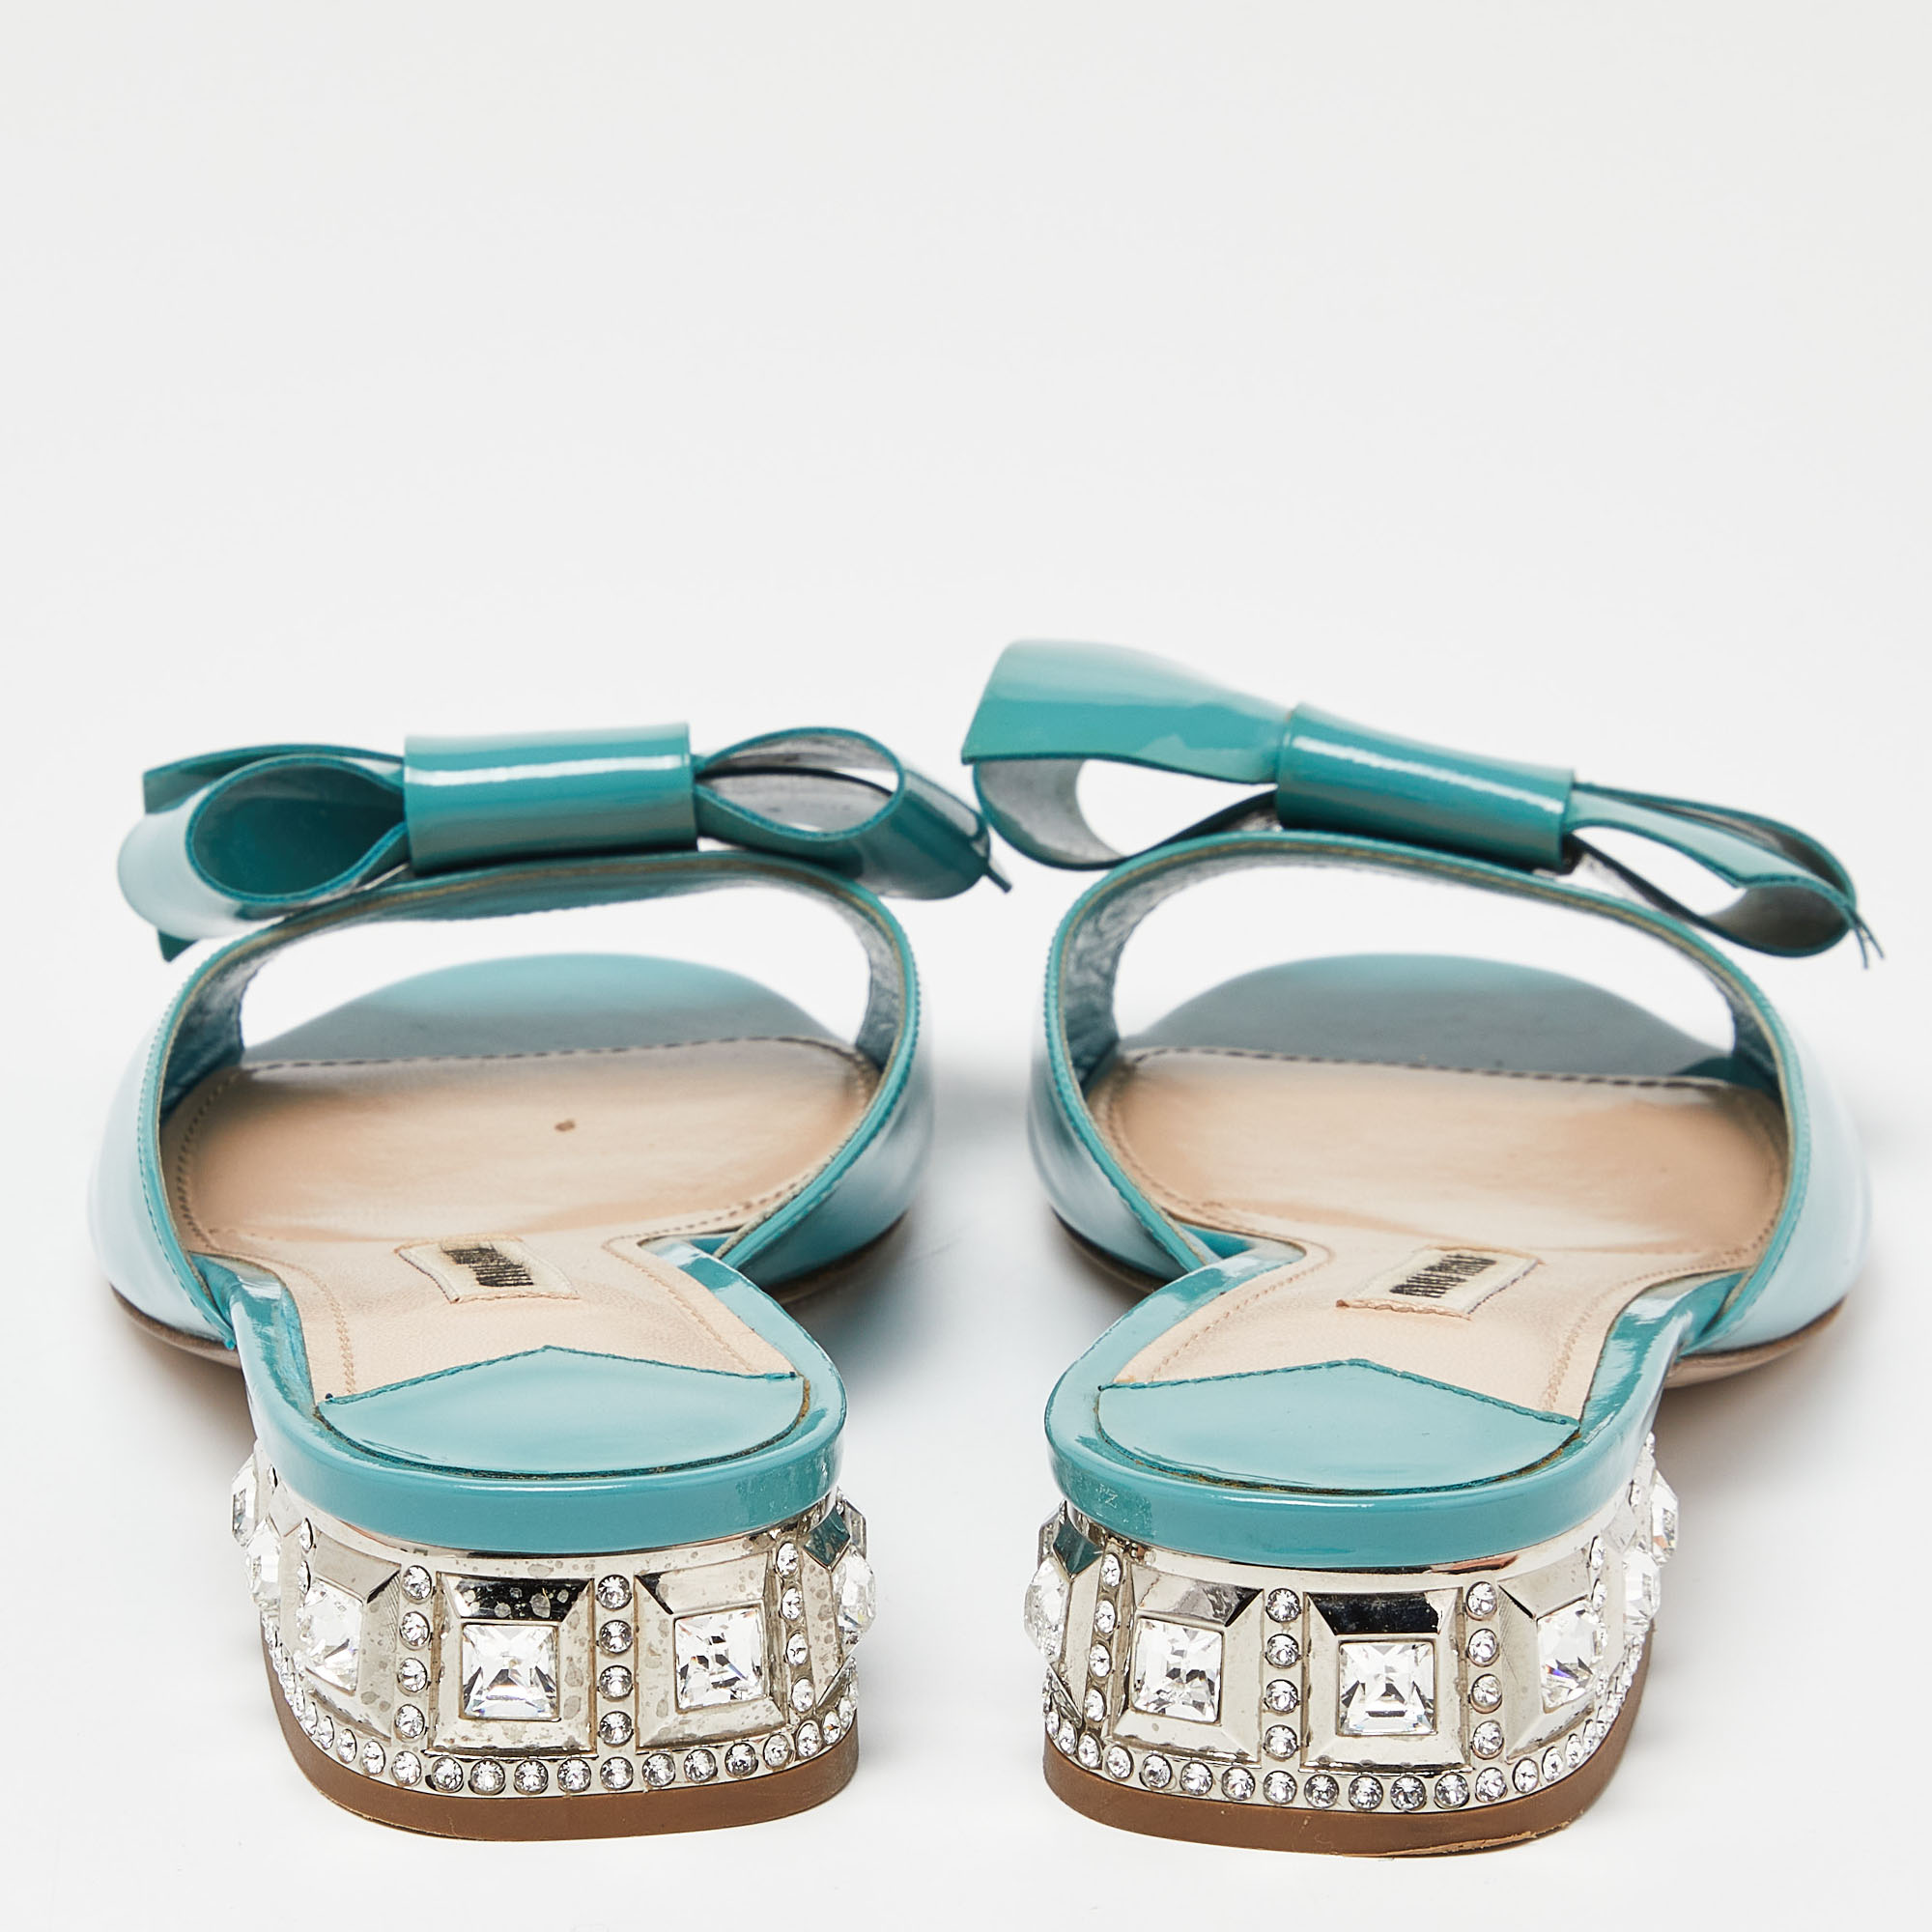 Miu Miu Green Patent Leather Bow Crystal Embellished Heel Slide Sandals Size 36